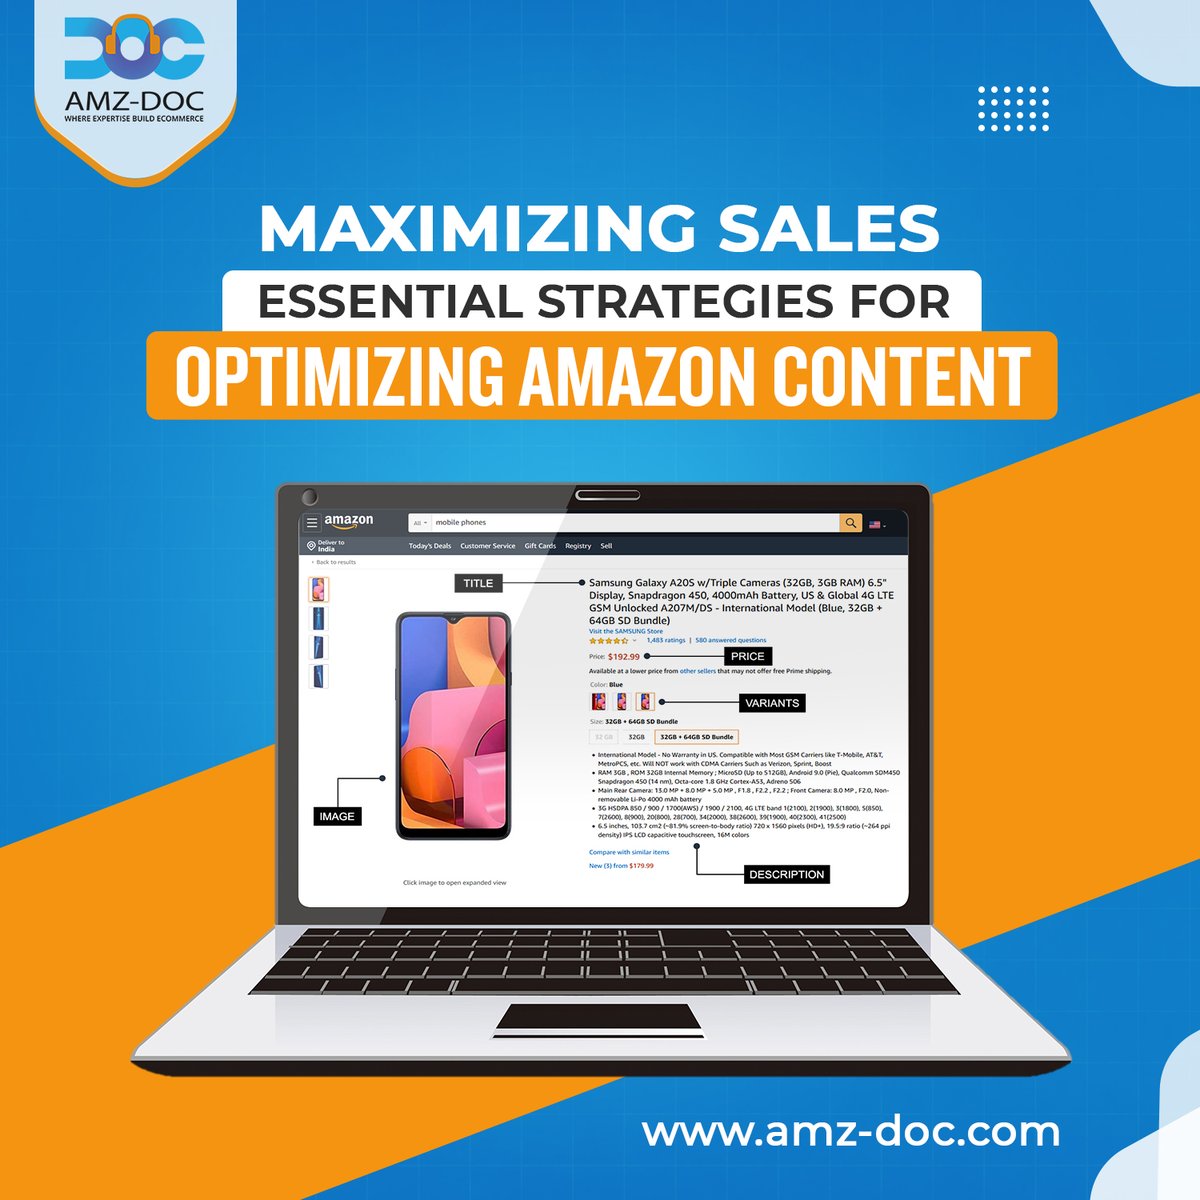 Maximizing Sales Essential Strategies for Optimizing Amazon Content by Amz Doc!

#AmazonOptimization #SalesBoost #ContentStrategy #EcommerceSuccess #AmazonSelling #OnlineRetail #ProductVisibility #BrandReputation #DigitalMarketing
#CustomerSatisfaction